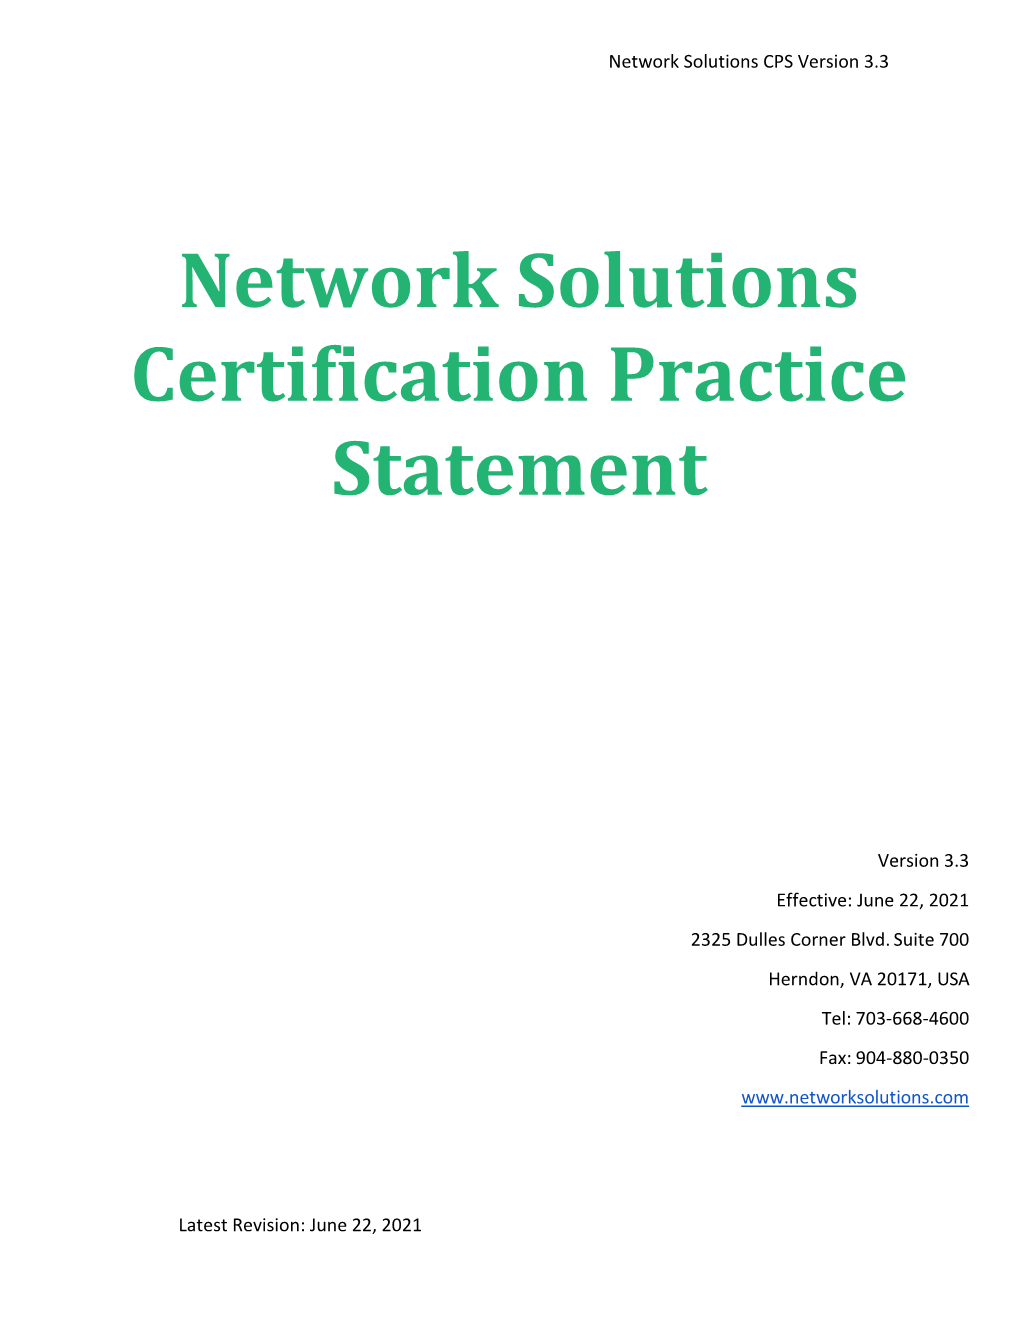 Network Solutions Certification Practice Statement